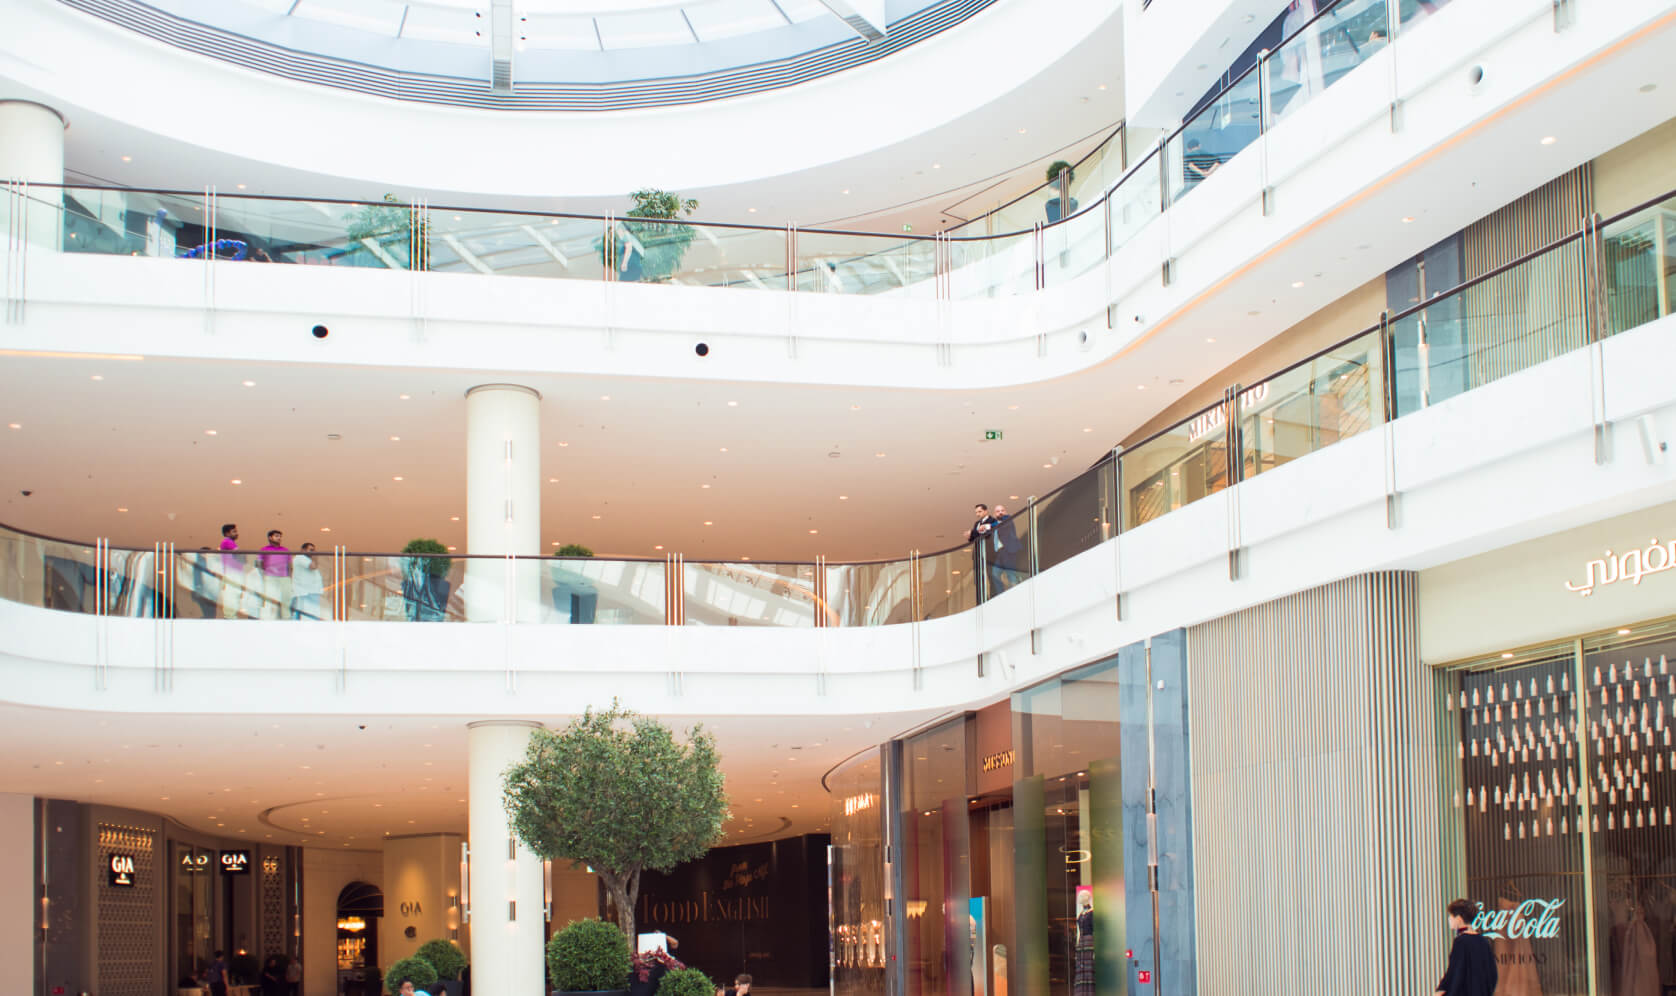 Indoor drone security malls & retail